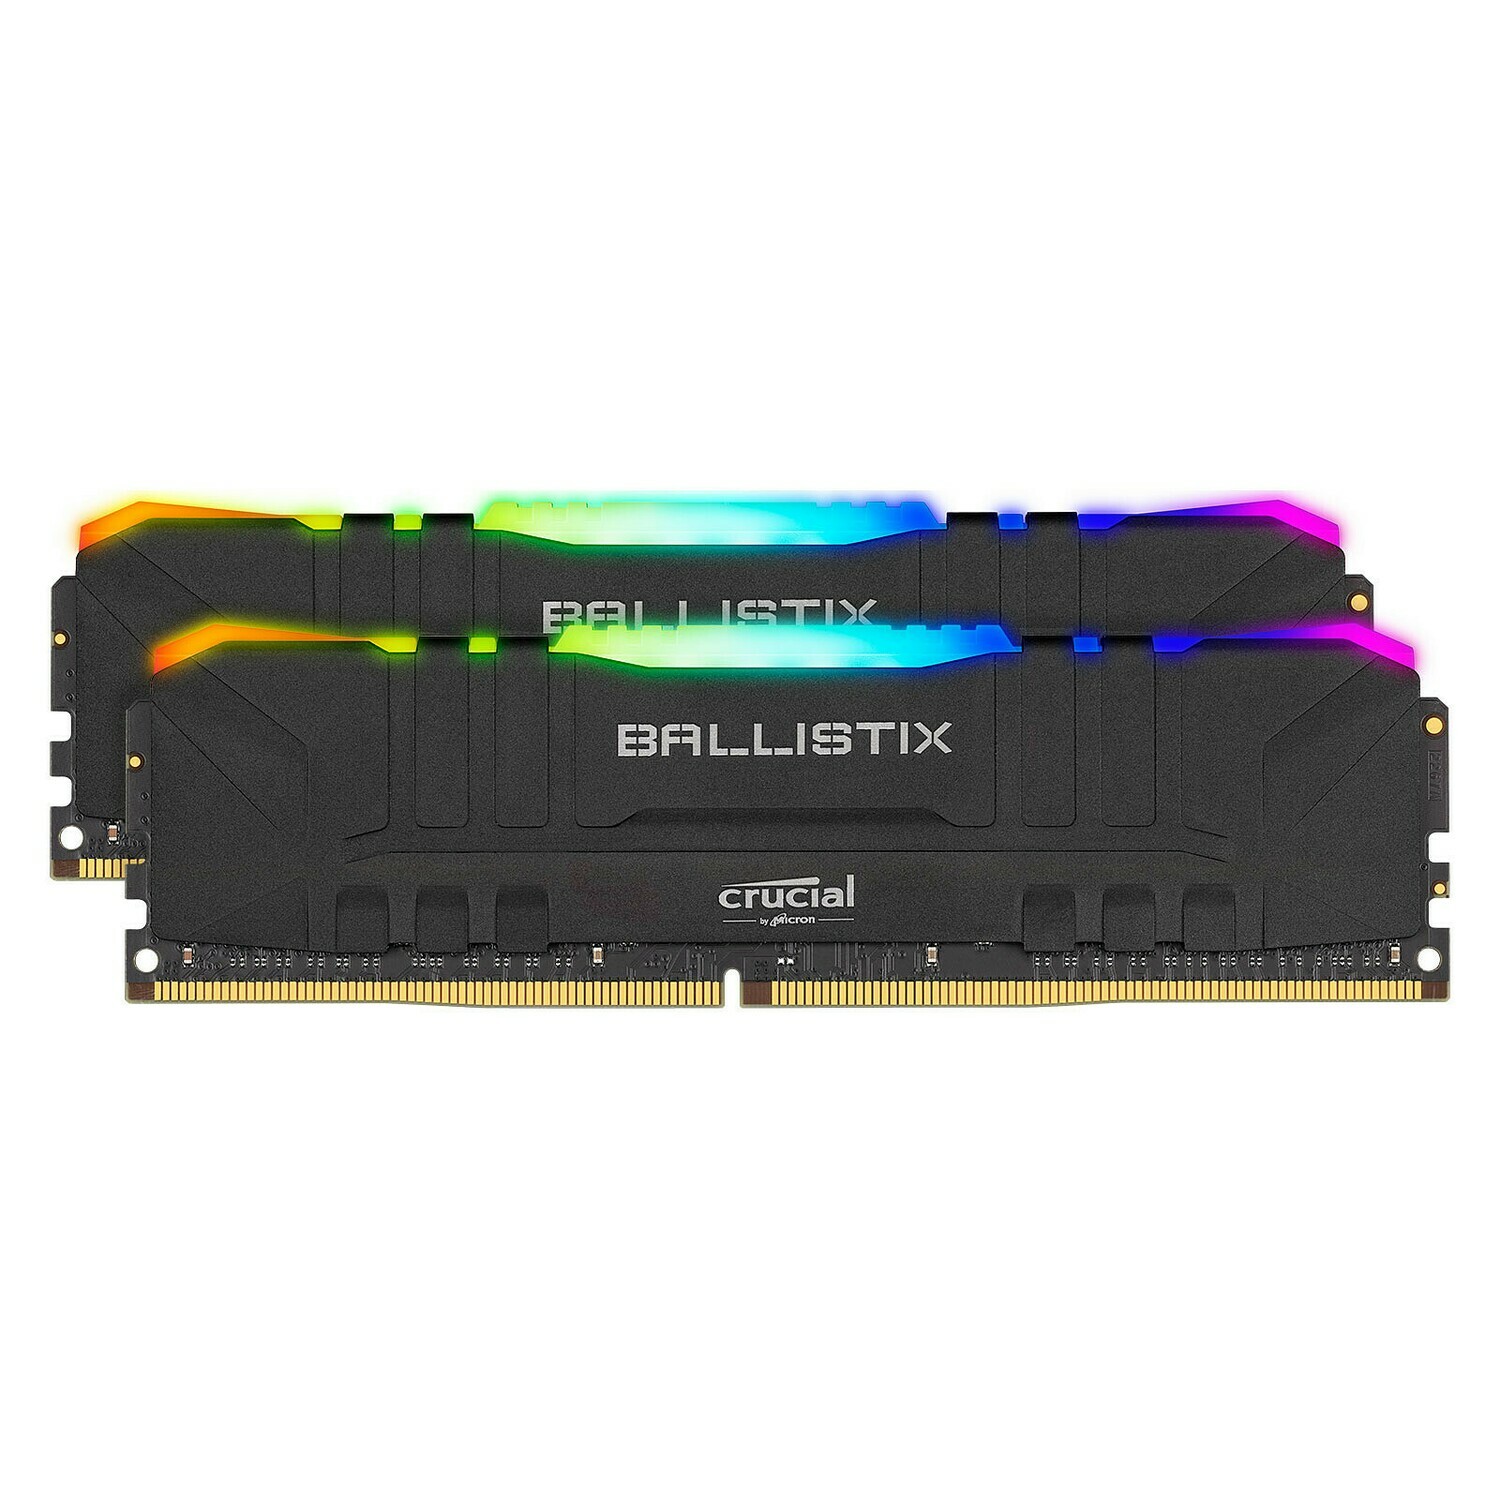 Crucial Ballistix RGB 16GB (8GB x2) 3200 MHz CL15 DDR4 RAM, Gaming Memory Kit, Black